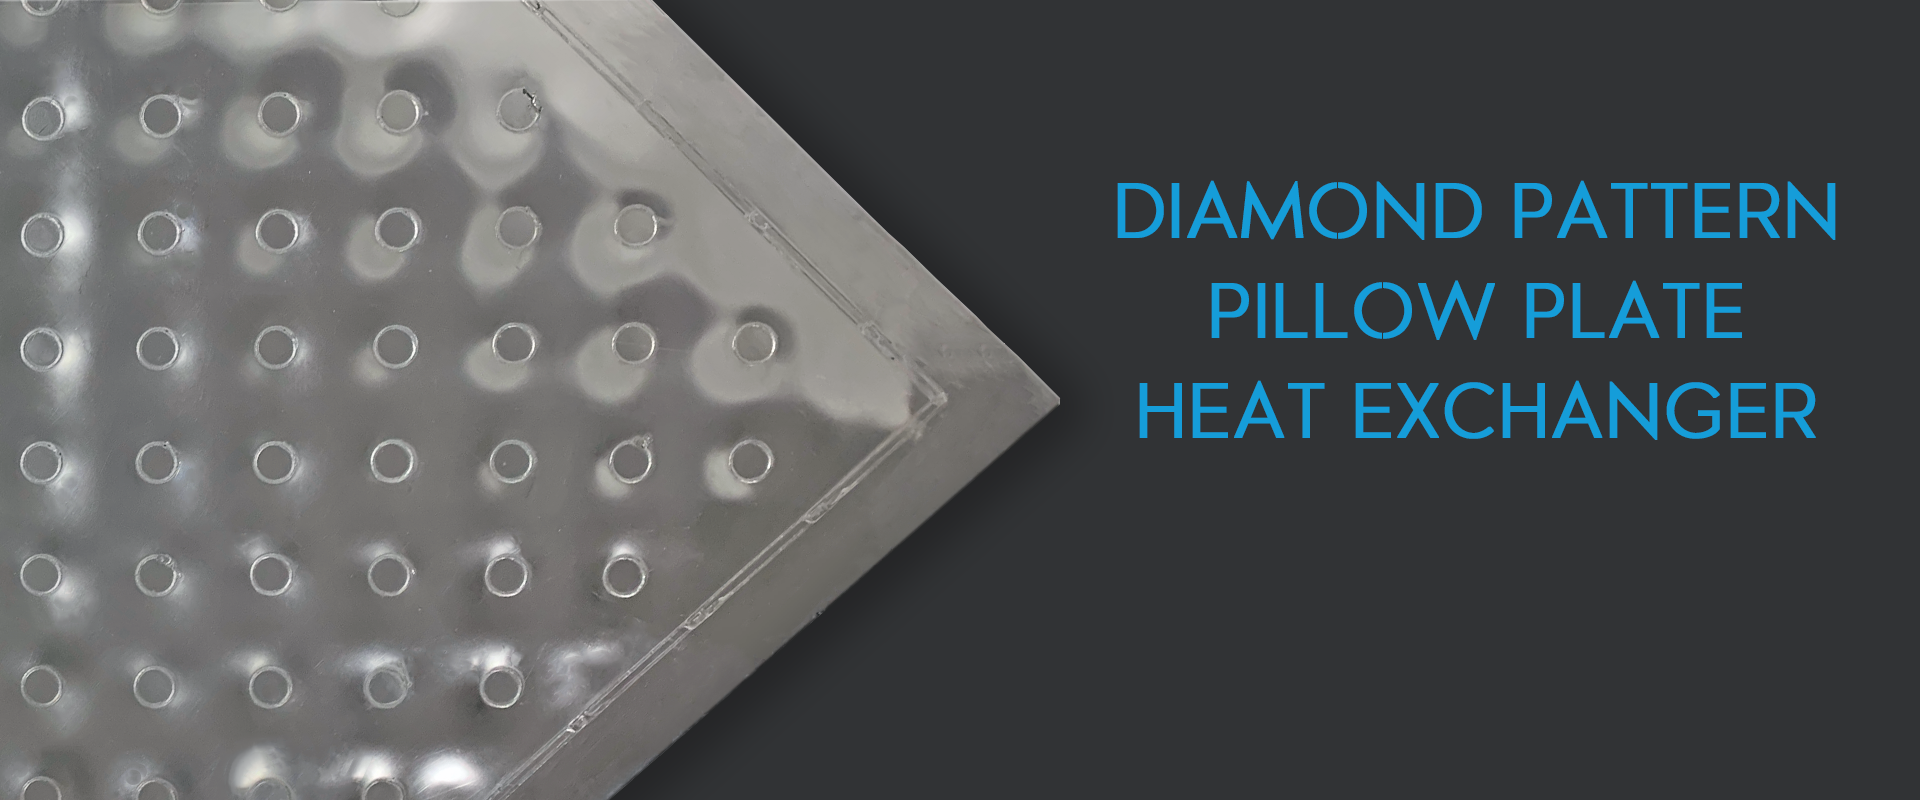 Diamond Pattern Pillow Plate Heat Exchanger